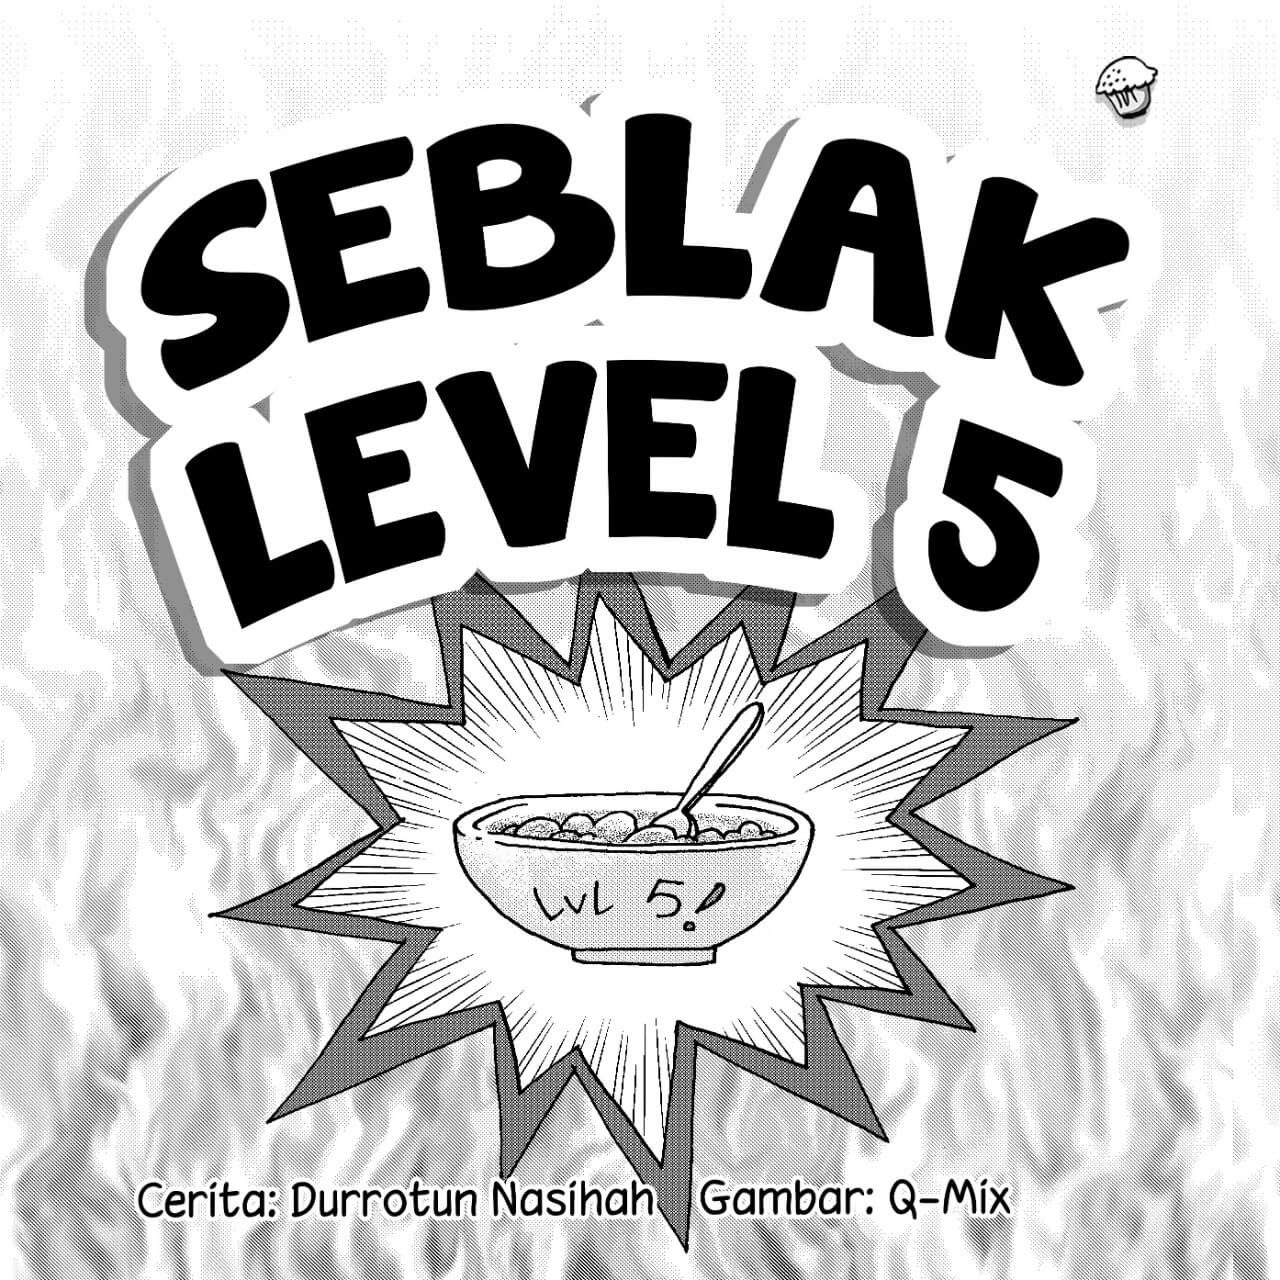 seblak level 5 cover bw